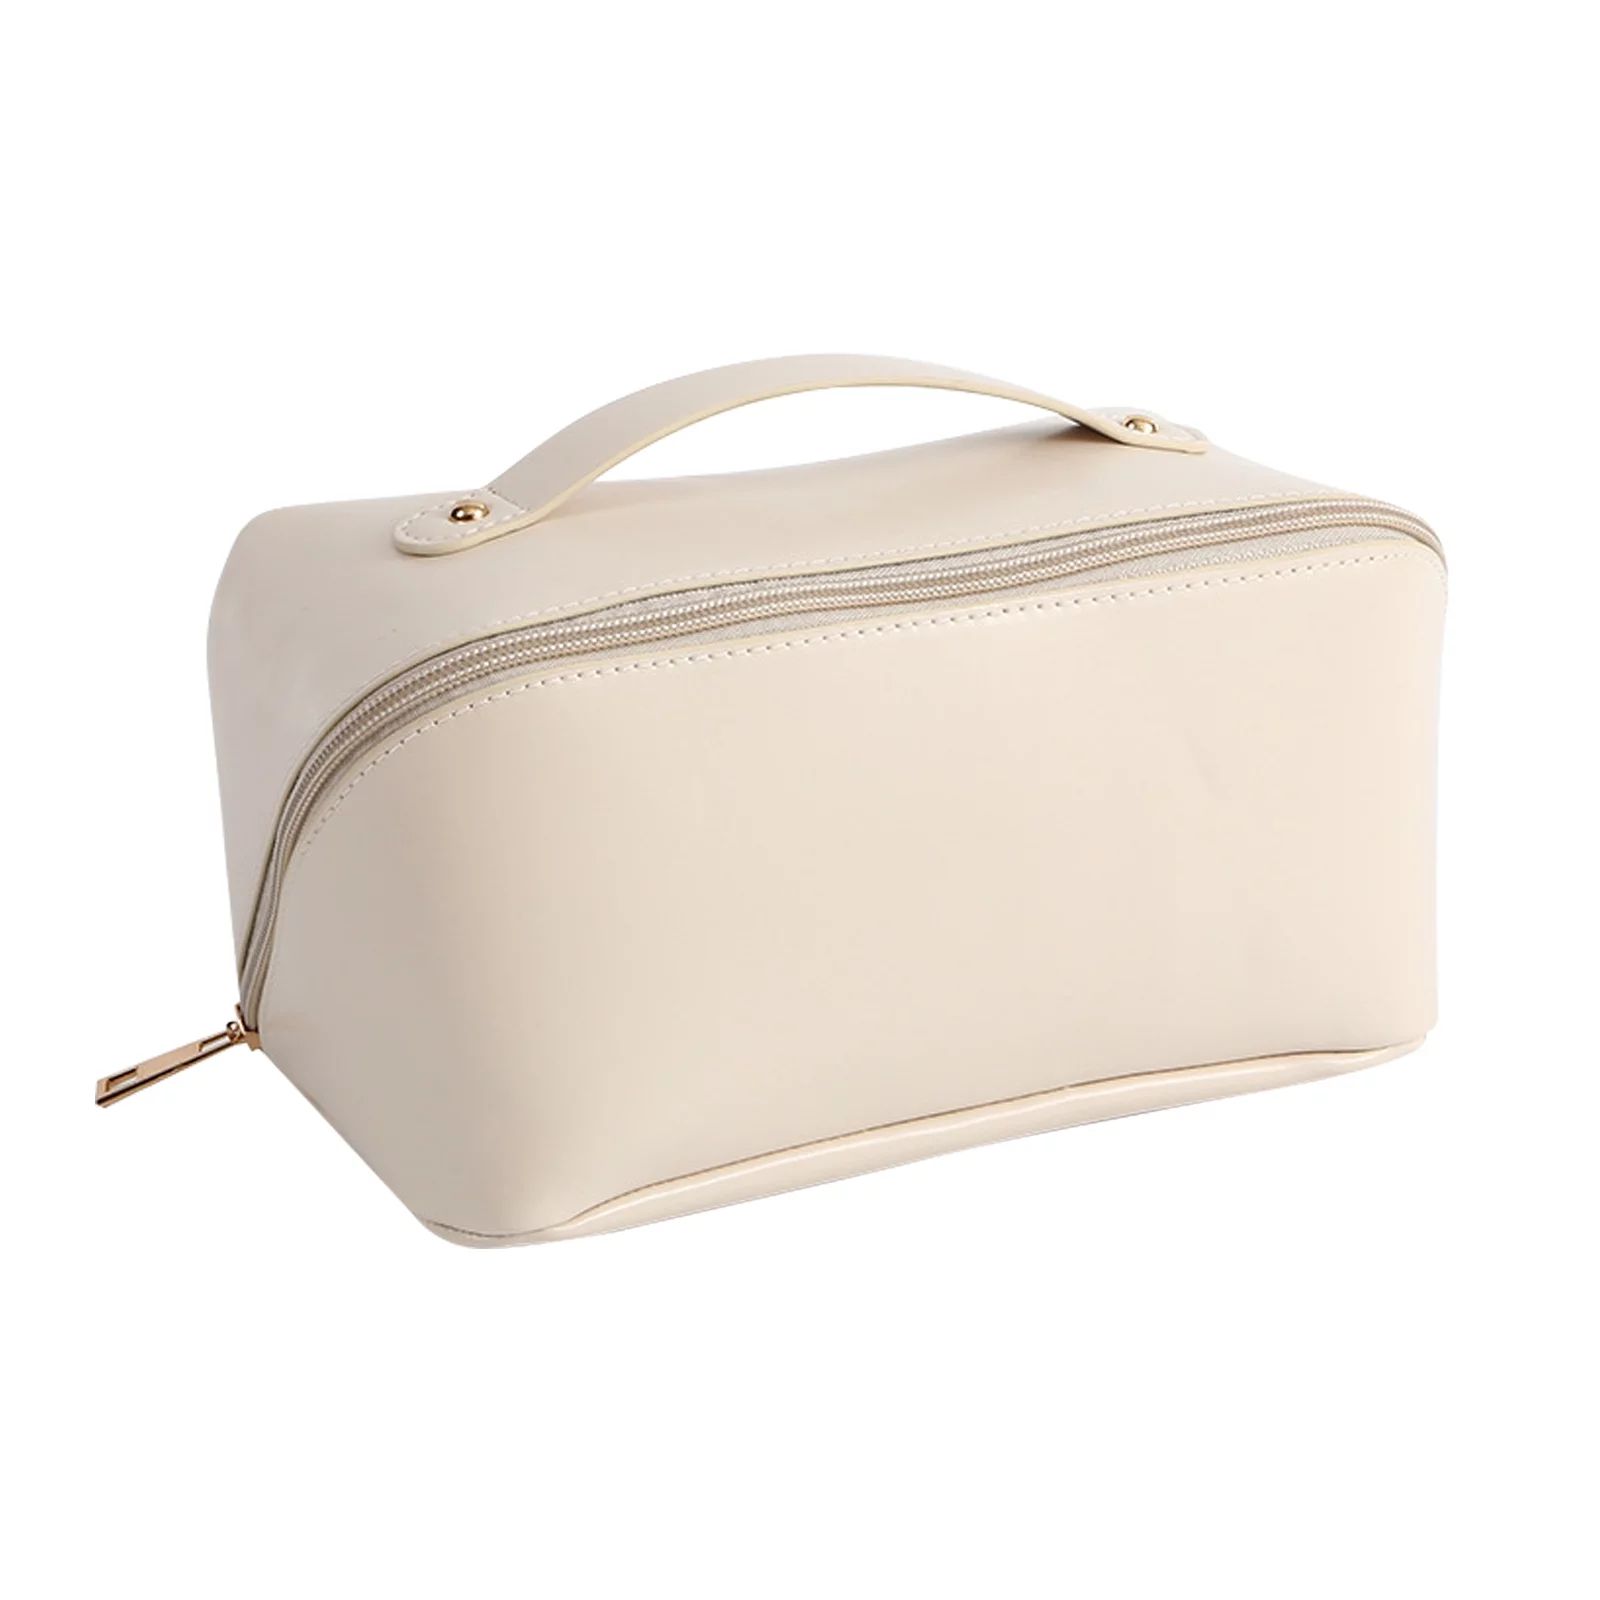 Large Capacity Travel Cosmetic Bag, Multifunctional Storage Makeup Bag PU Leather Makeup Bag with... | Walmart (US)